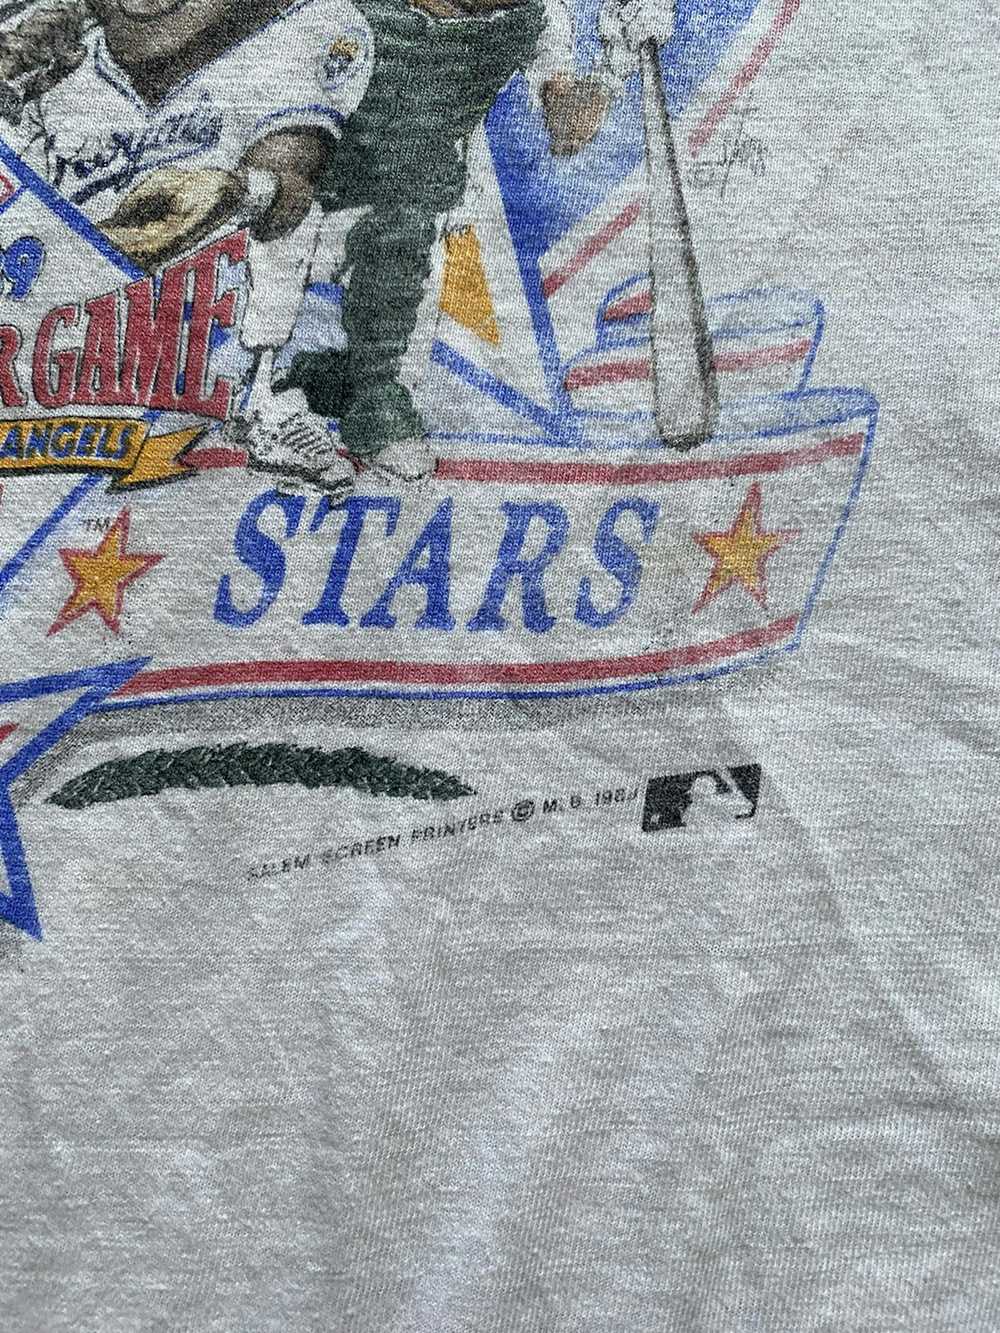 MLB VINTAGE 1989 ALL STAR GAME TEE - image 2